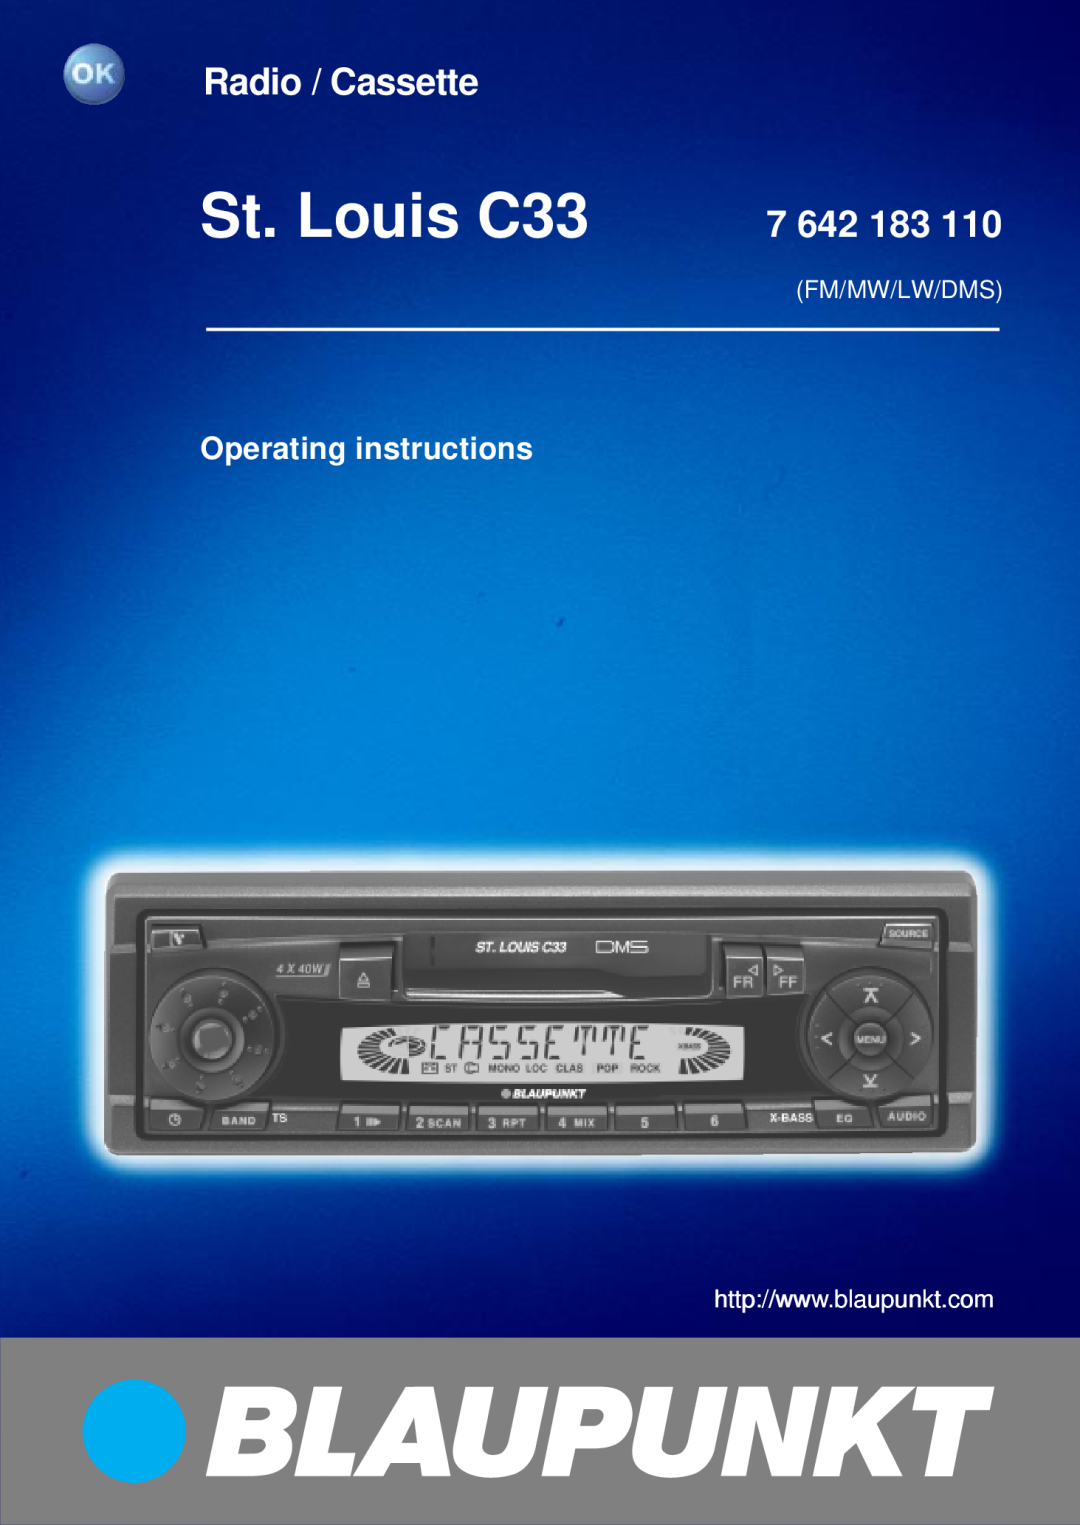 Blaupunkt 7 642 183 110 operating instructions St. Louis C33, Radio / Cassette, Operating instructions, Fm/Mw/Lw/Dms 